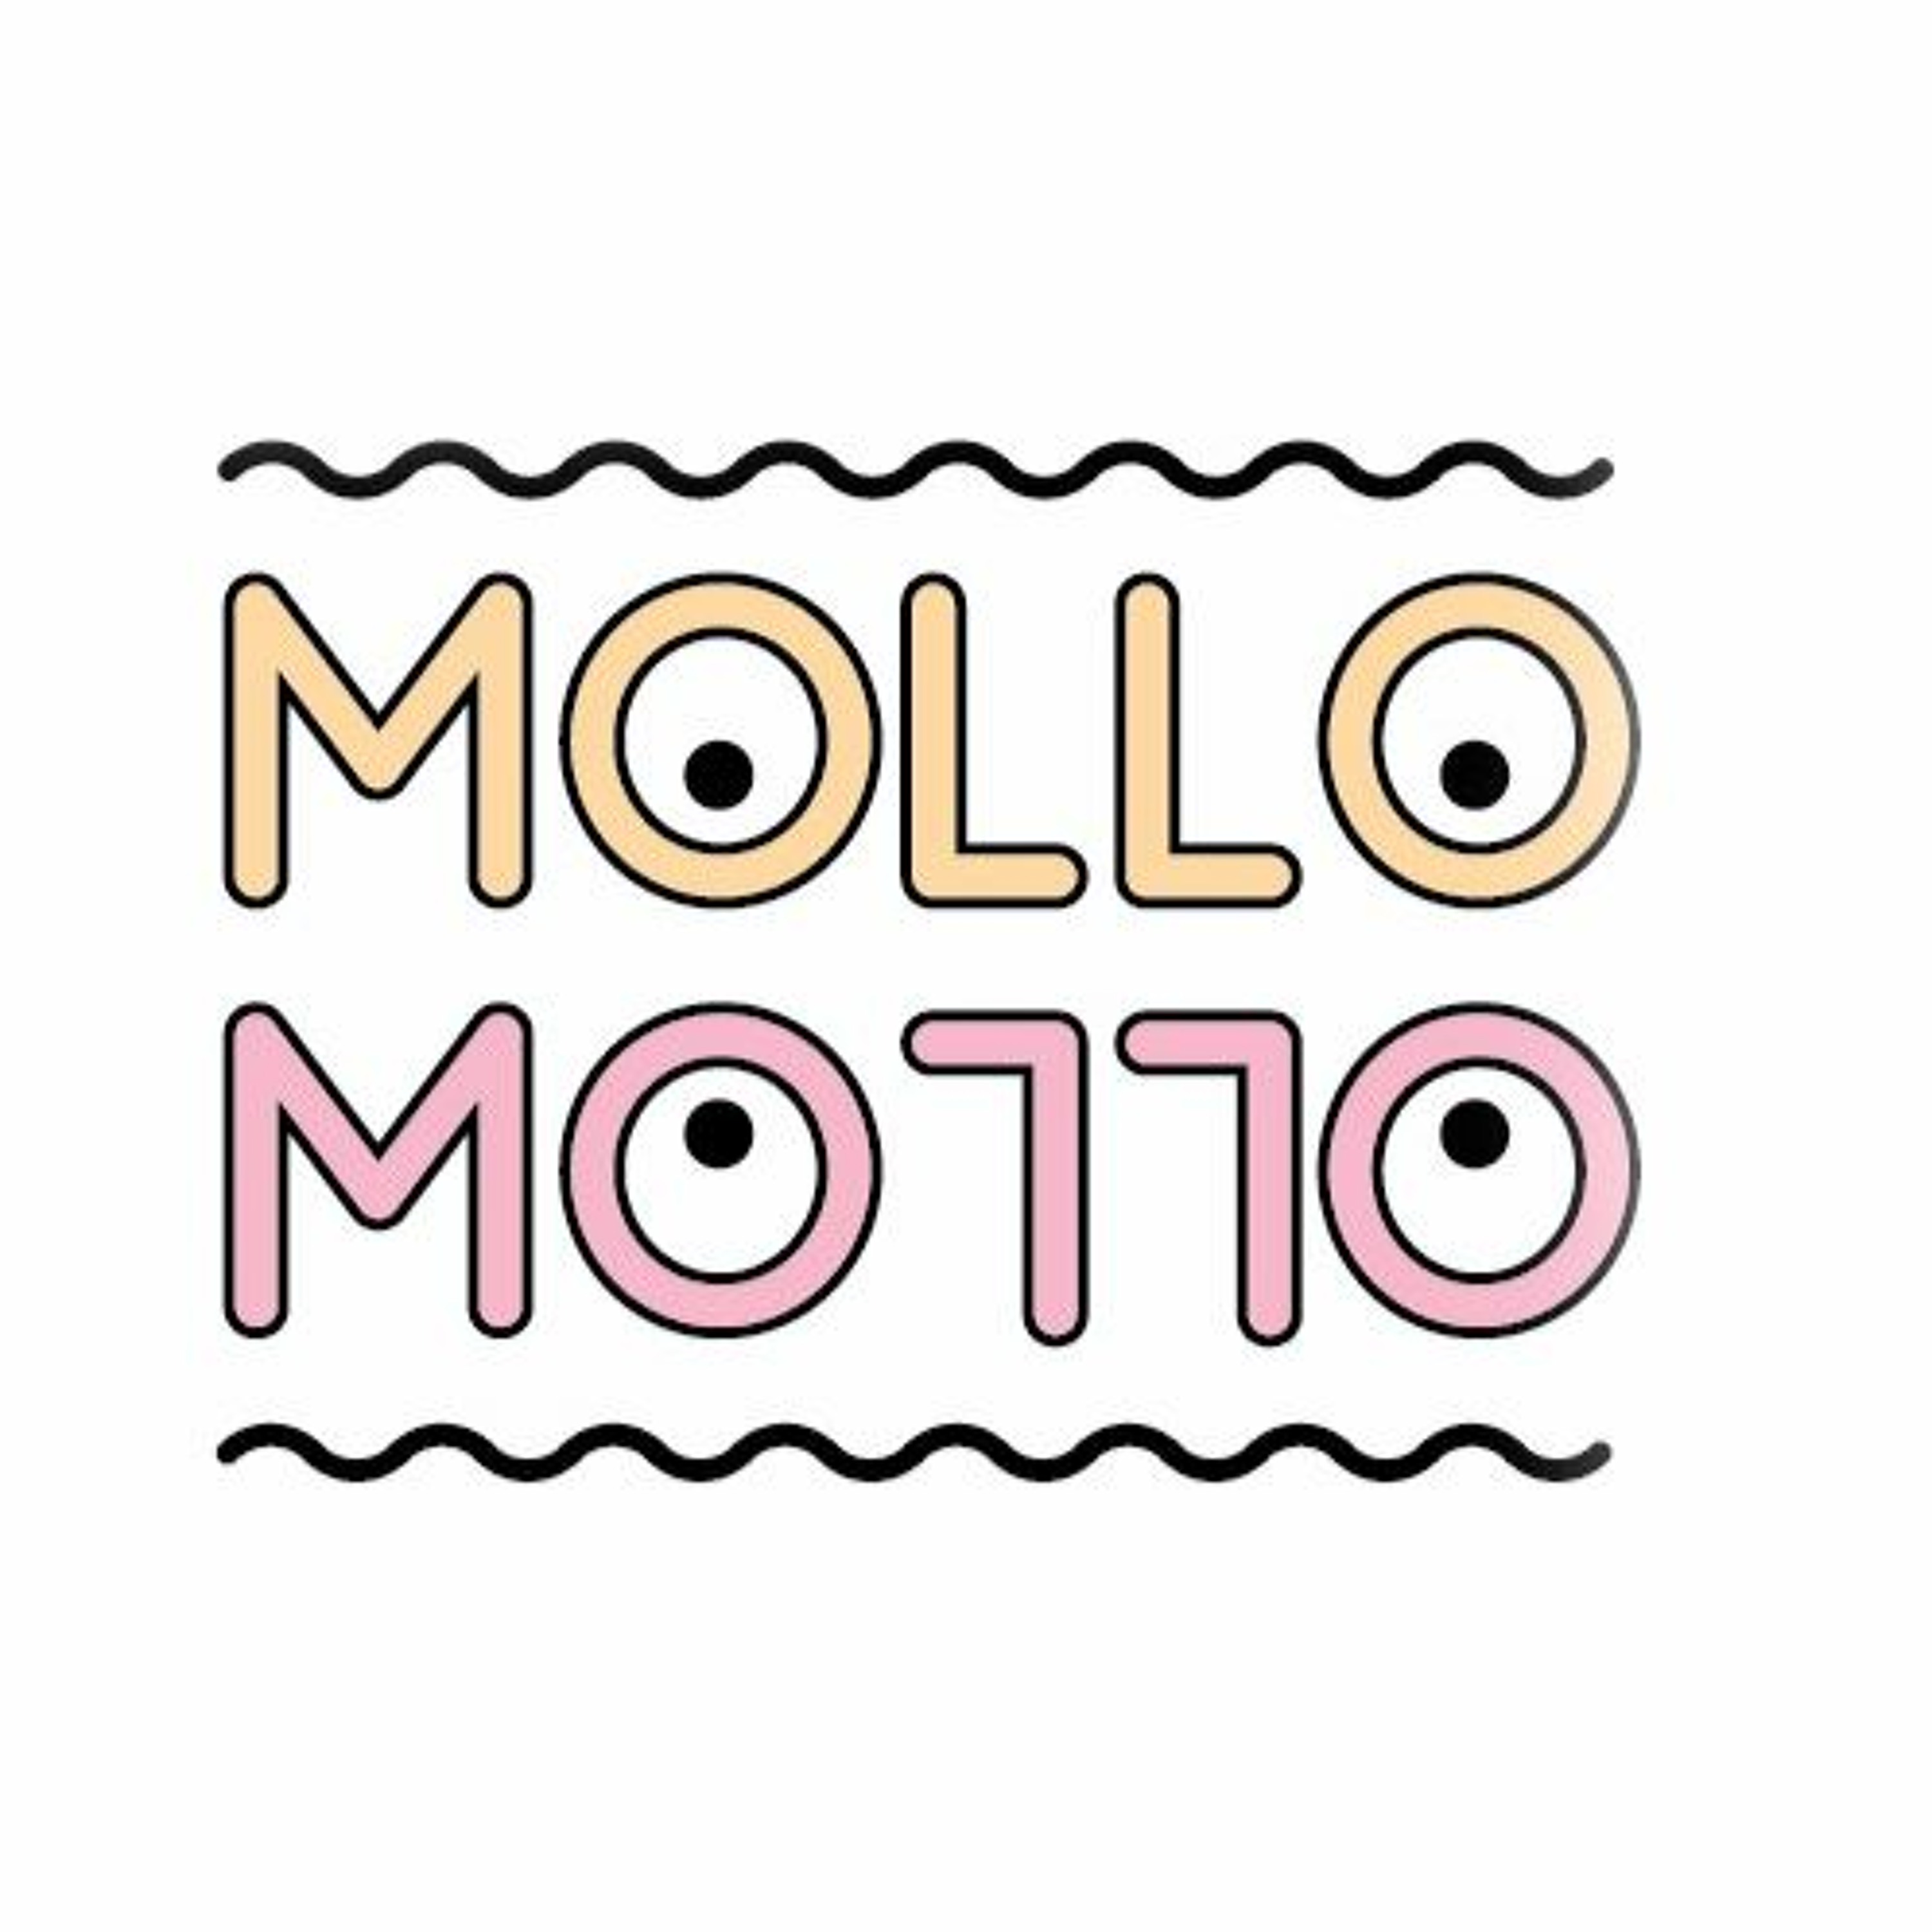 MolloMollo S1 E02 : Les Pétages de plombs